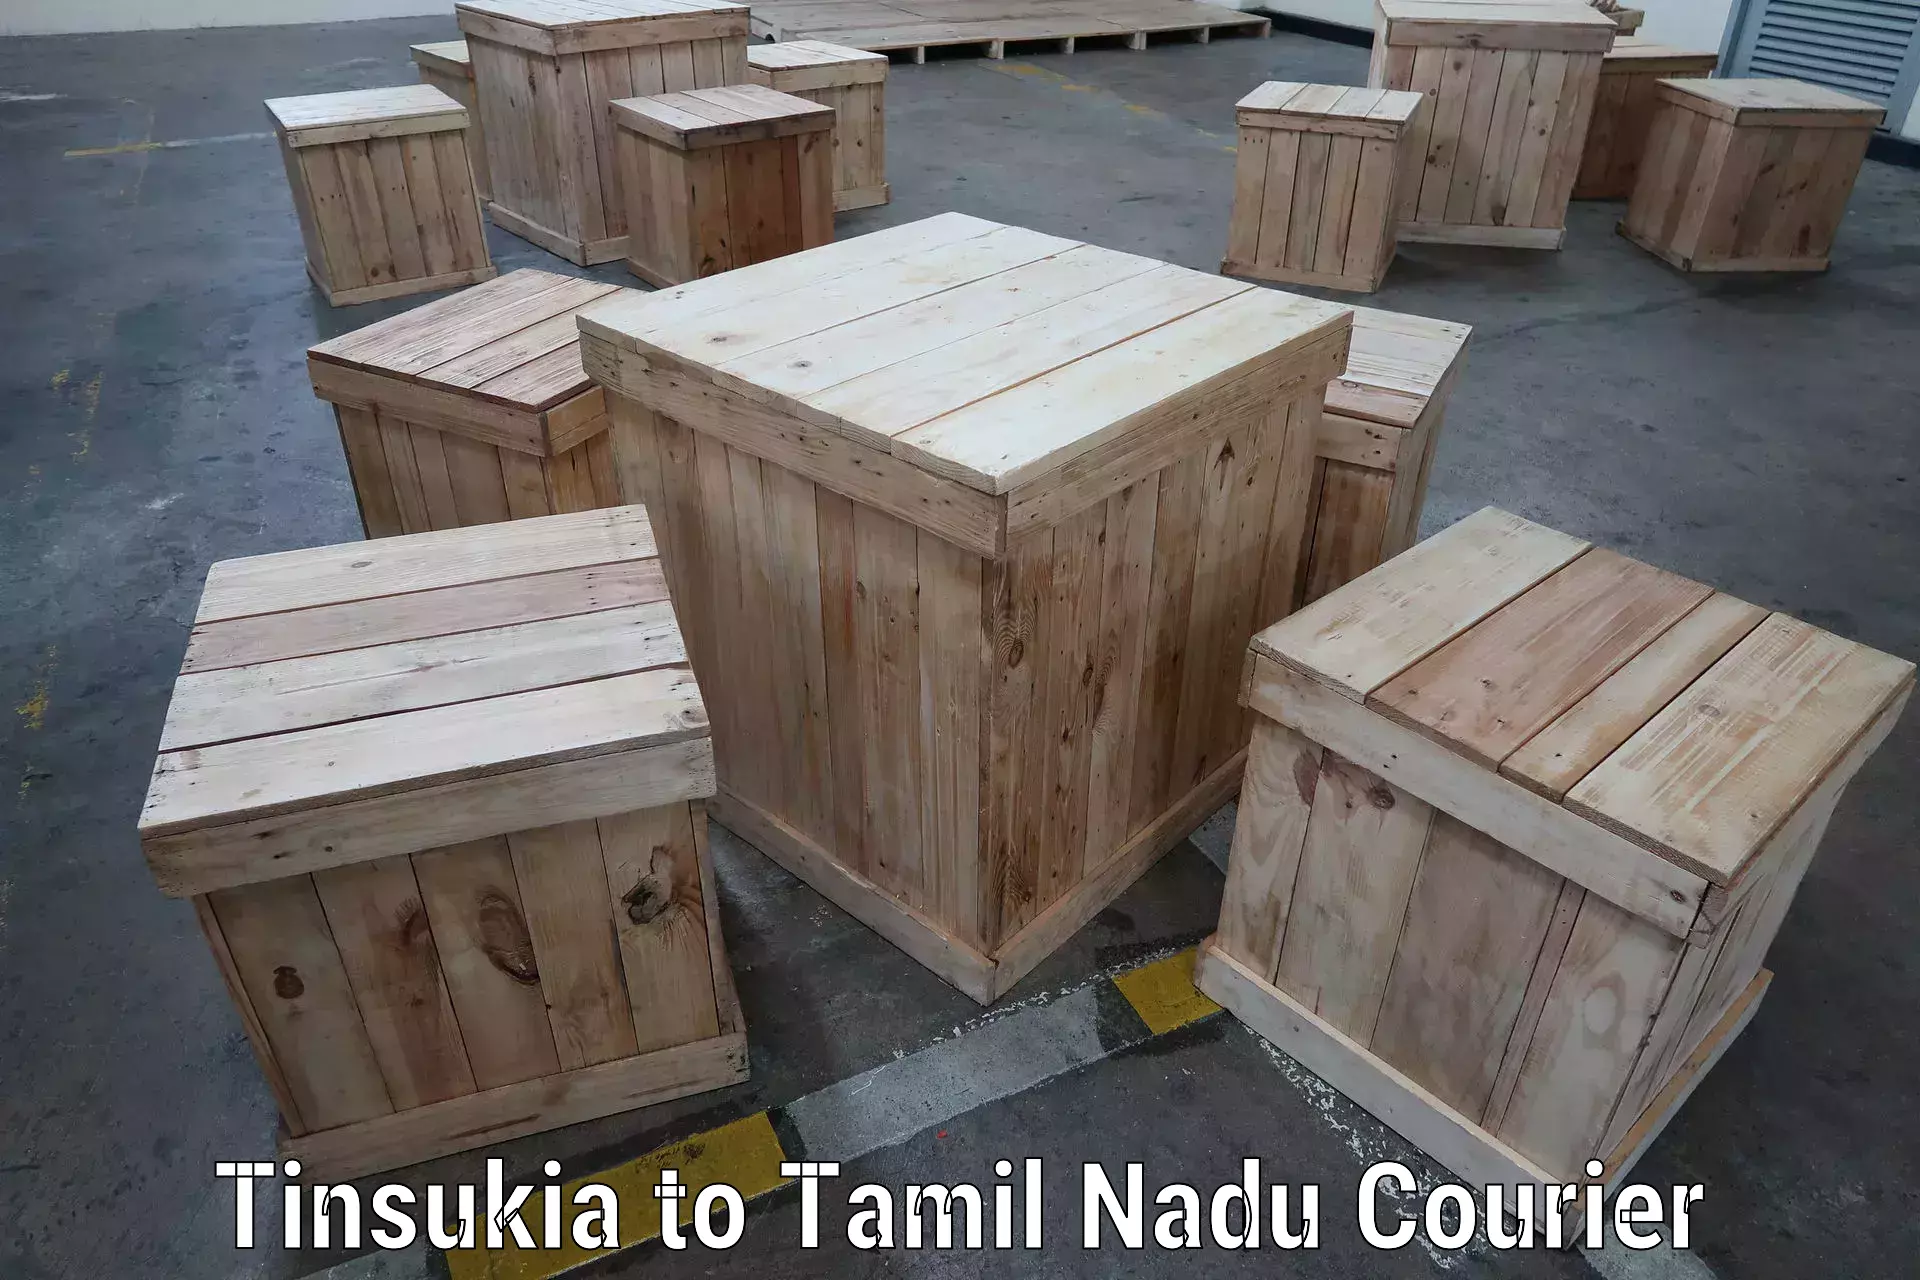 Reliable logistics providers Tinsukia to Tamil Nadu